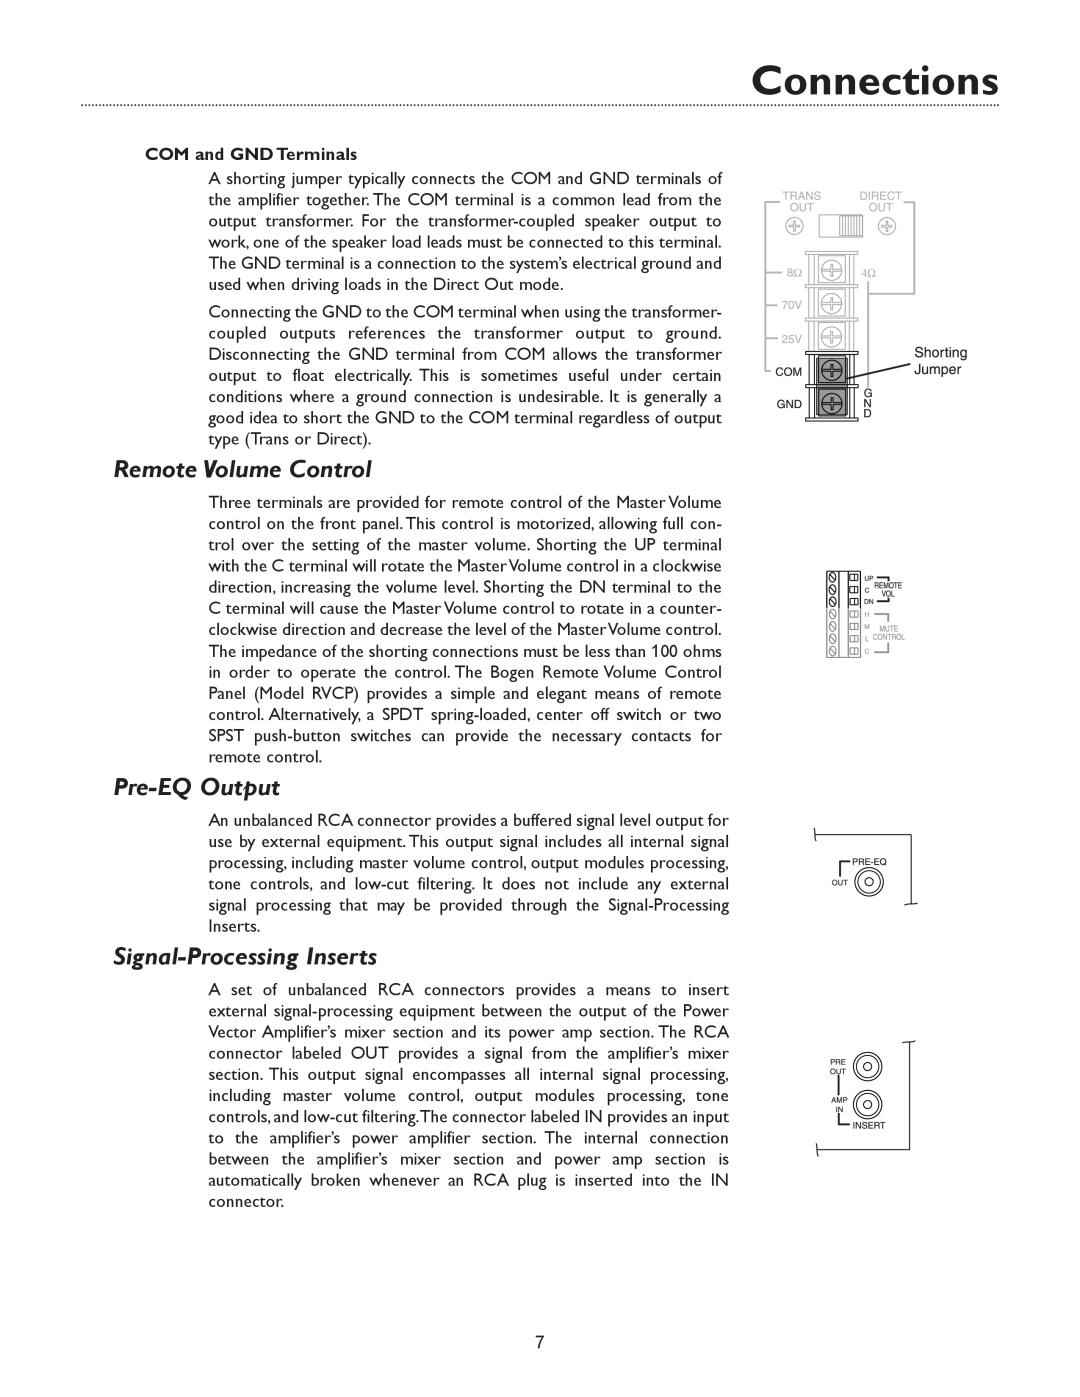 Bogen & V250, V35 Remote Volume Control, Pre-EQOutput, Signal-ProcessingInserts, COM and GND Terminals, Connections 